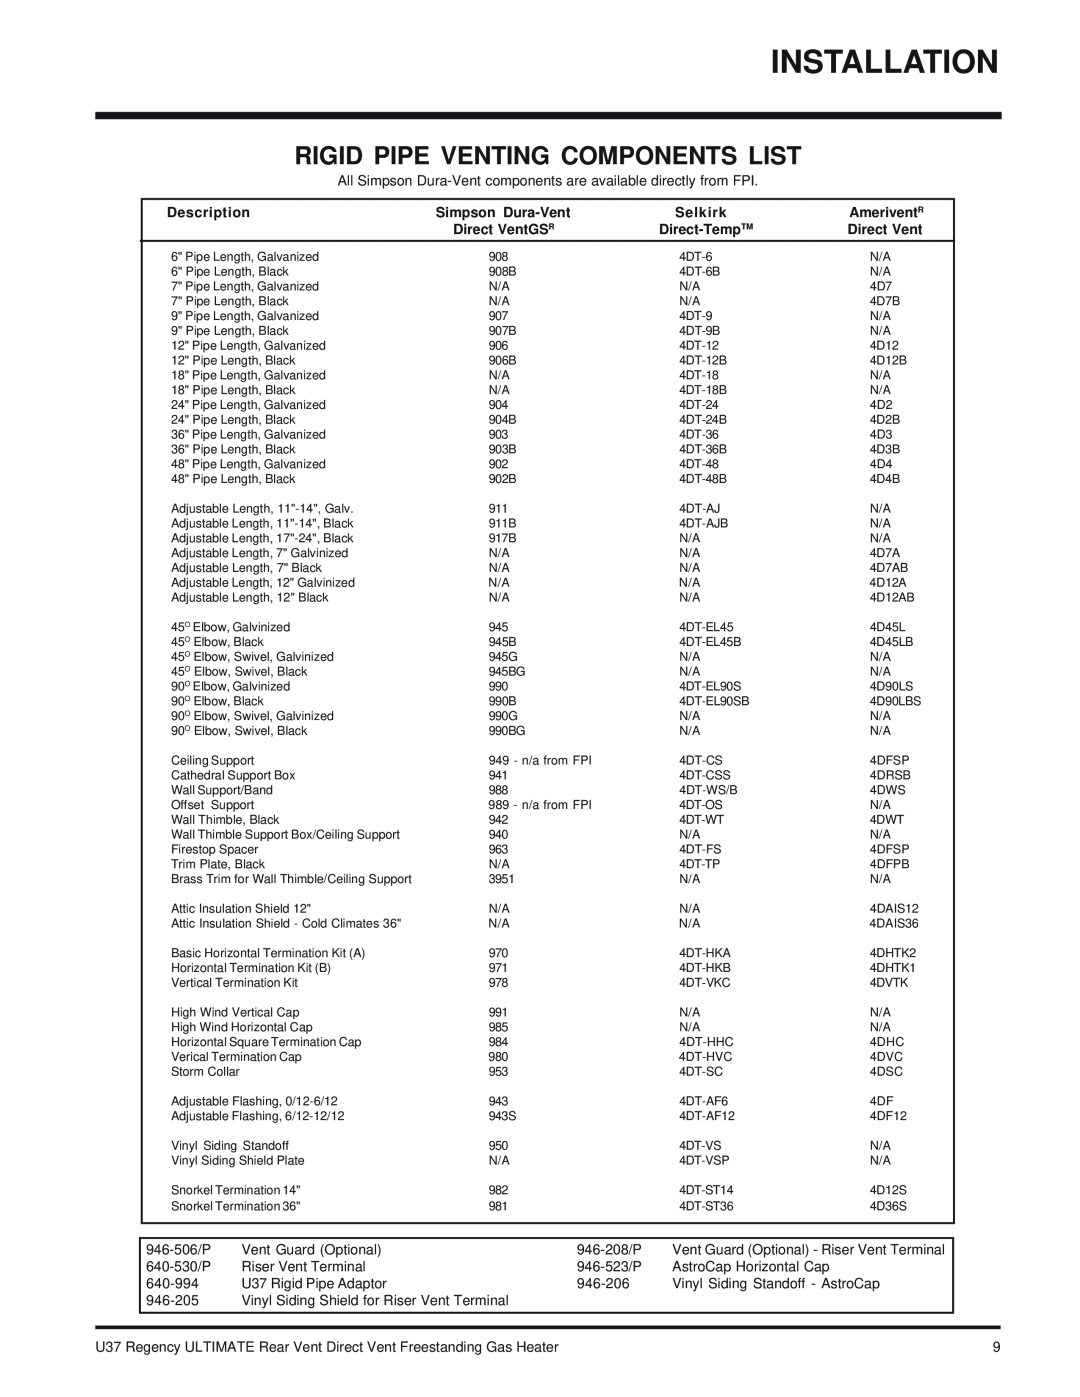 Regency U37-NG NATURAL GAS Installation, Rigid Pipe Venting Components List, Description, Simpson Dura-Vent, Selkirk 